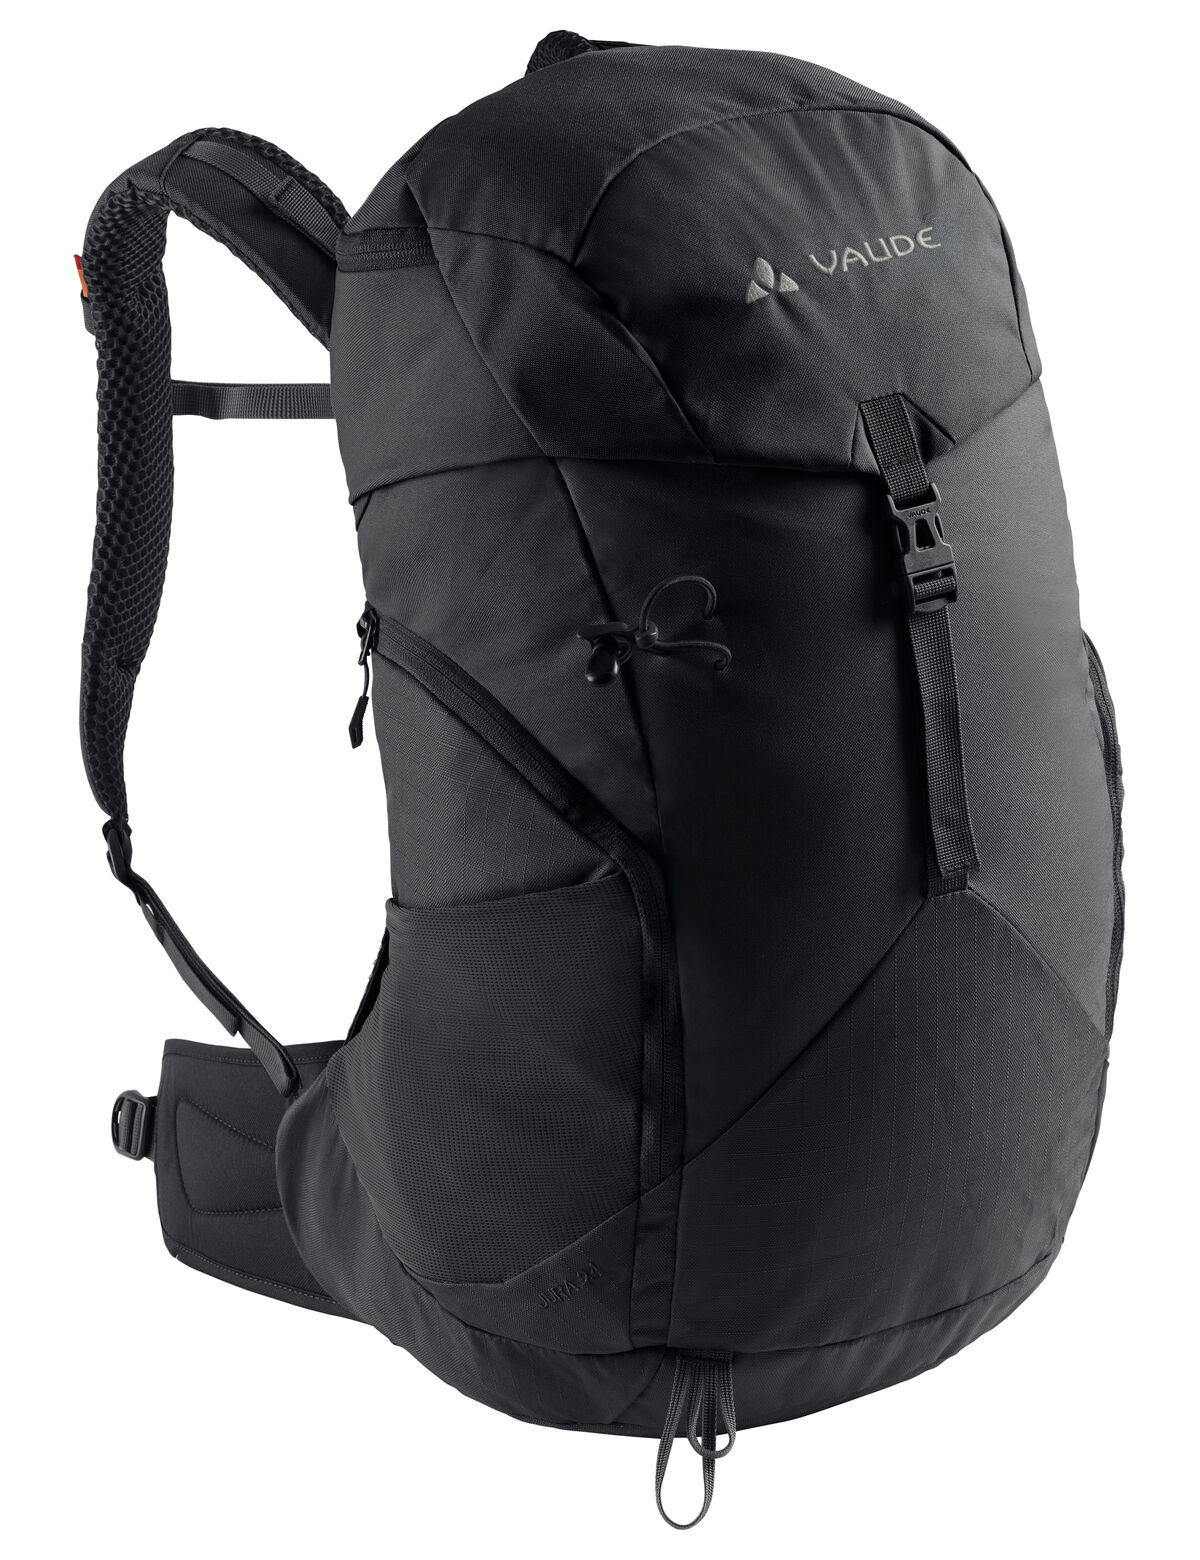 Vaude Jura 24 - Hiking backpack